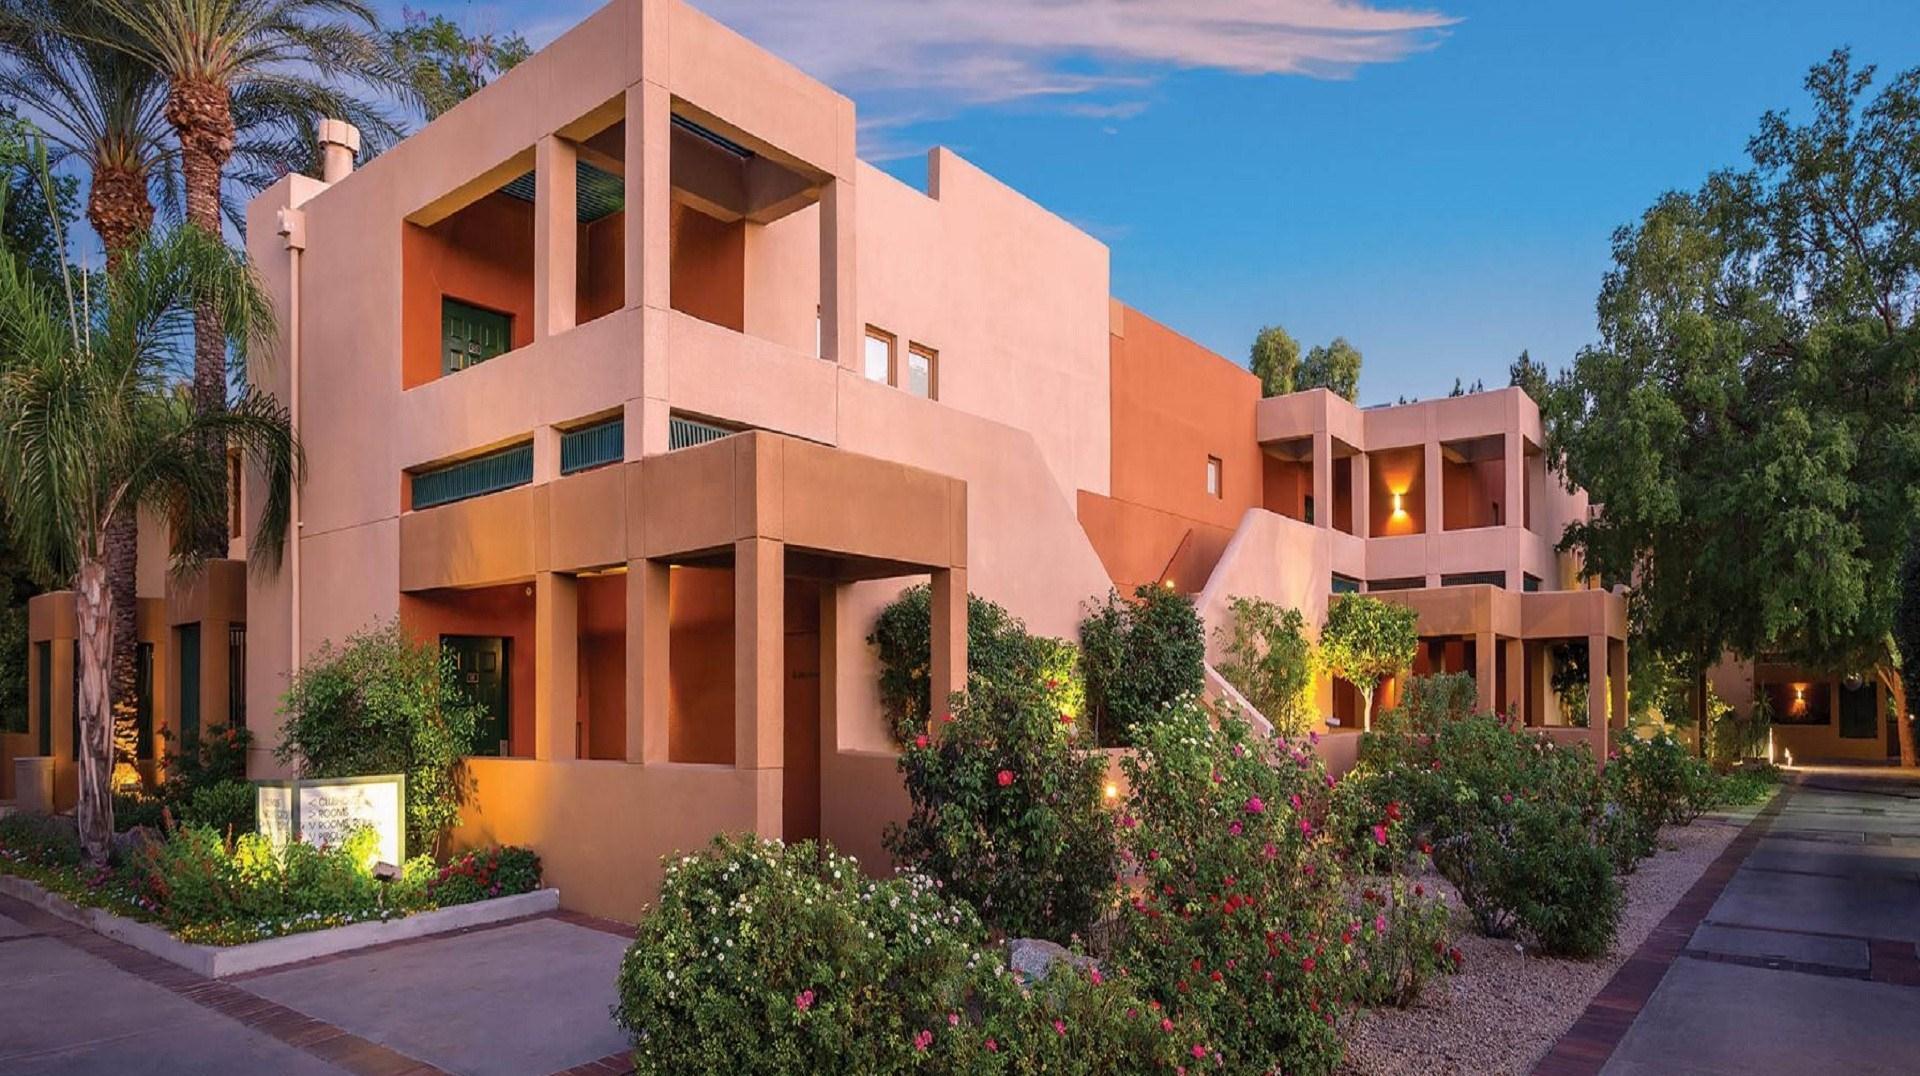 Orange Tree Resort in Scottsdale, AZ